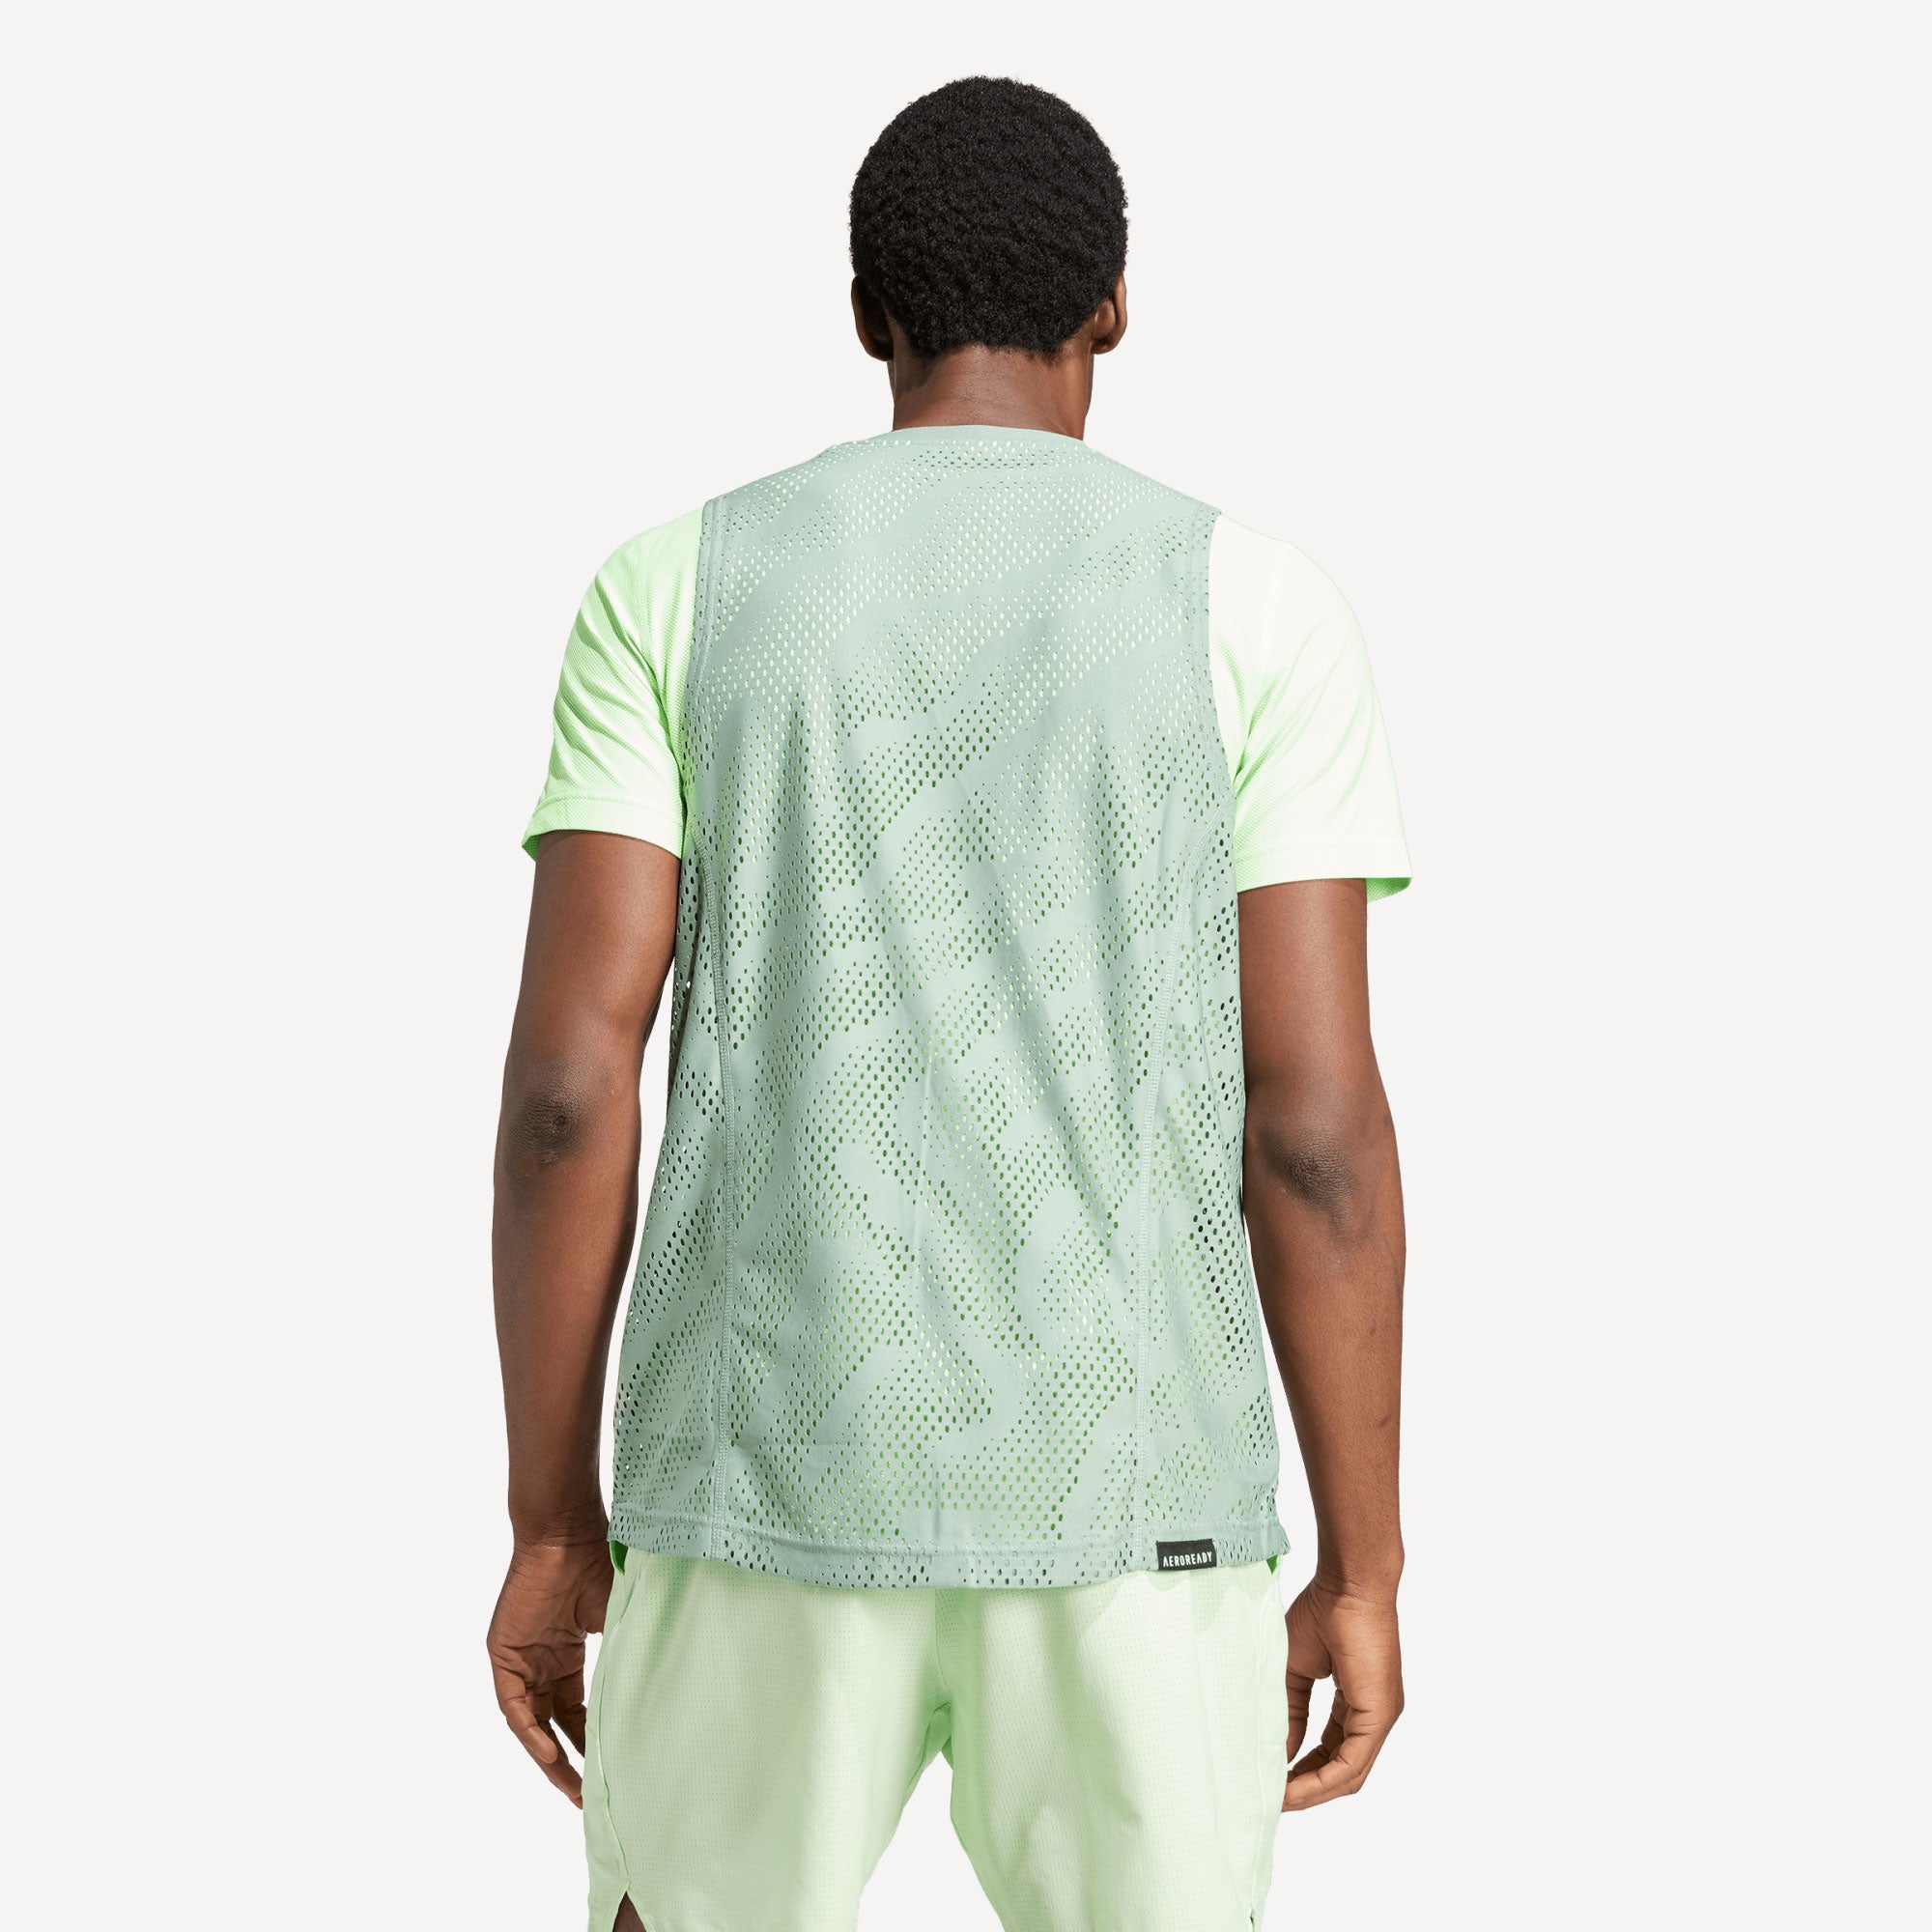 adidas Pro Melbourne Men's Layering Tennis Shirt - Green (2)